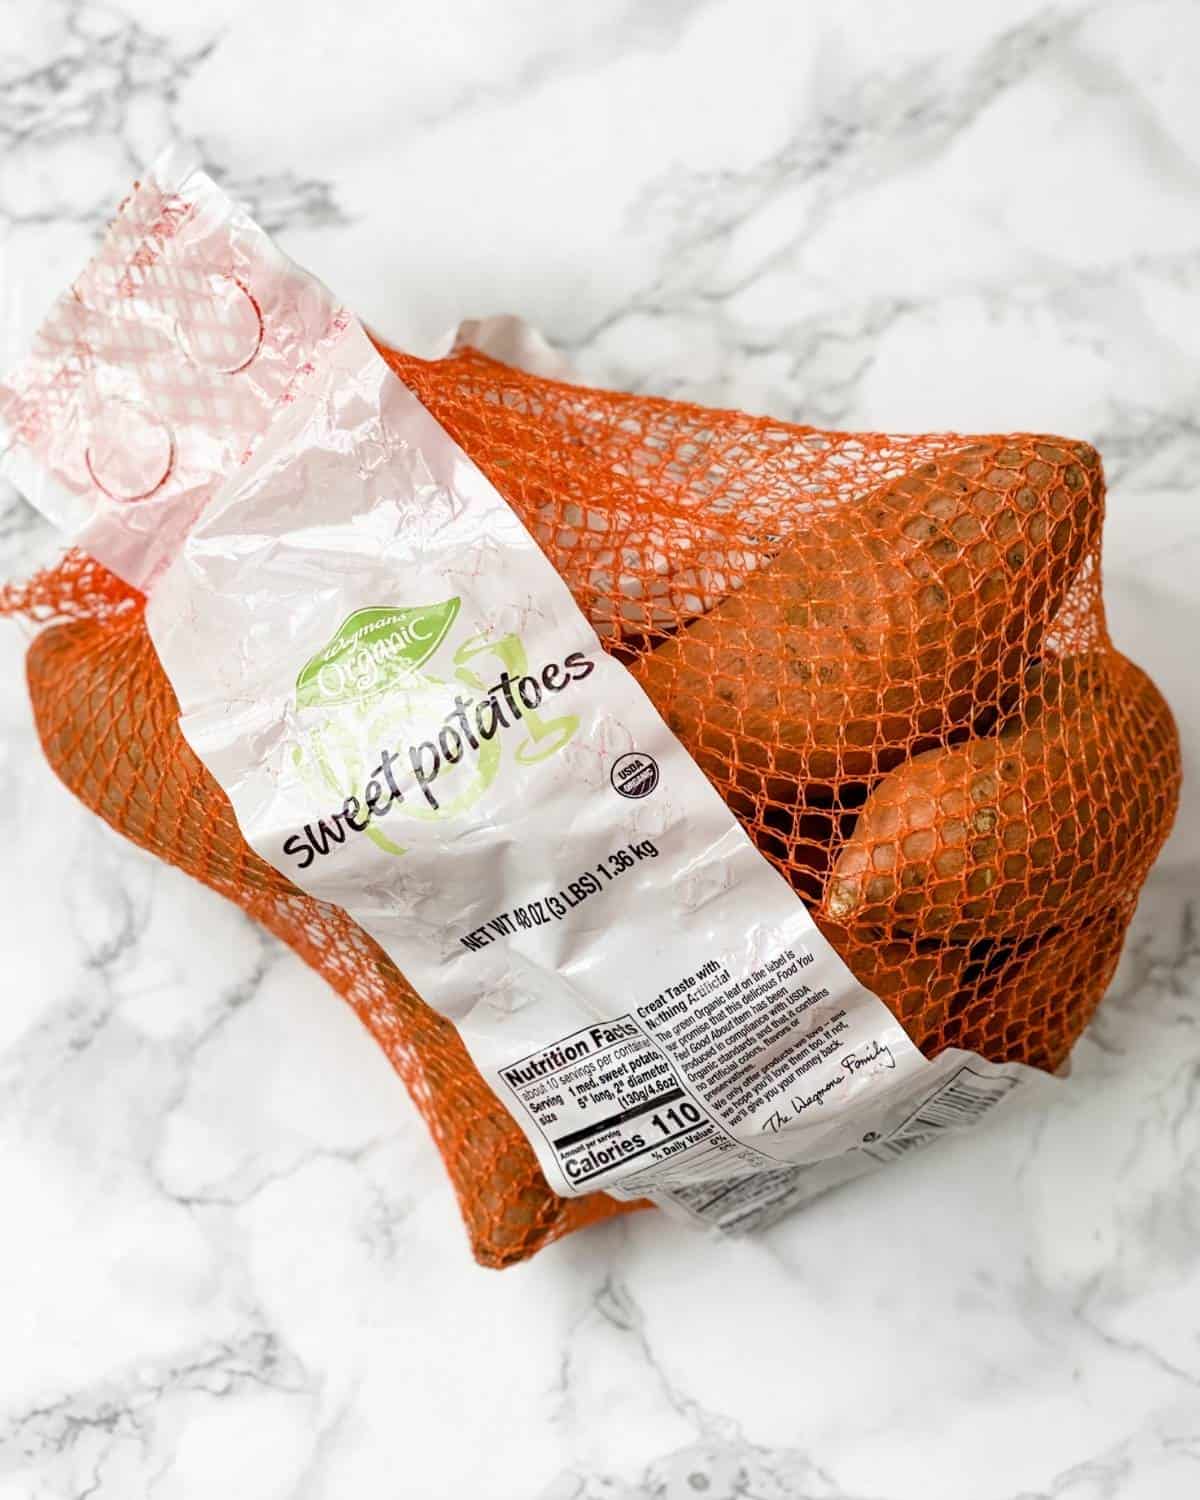 3lb bag of organic sweet potatoes